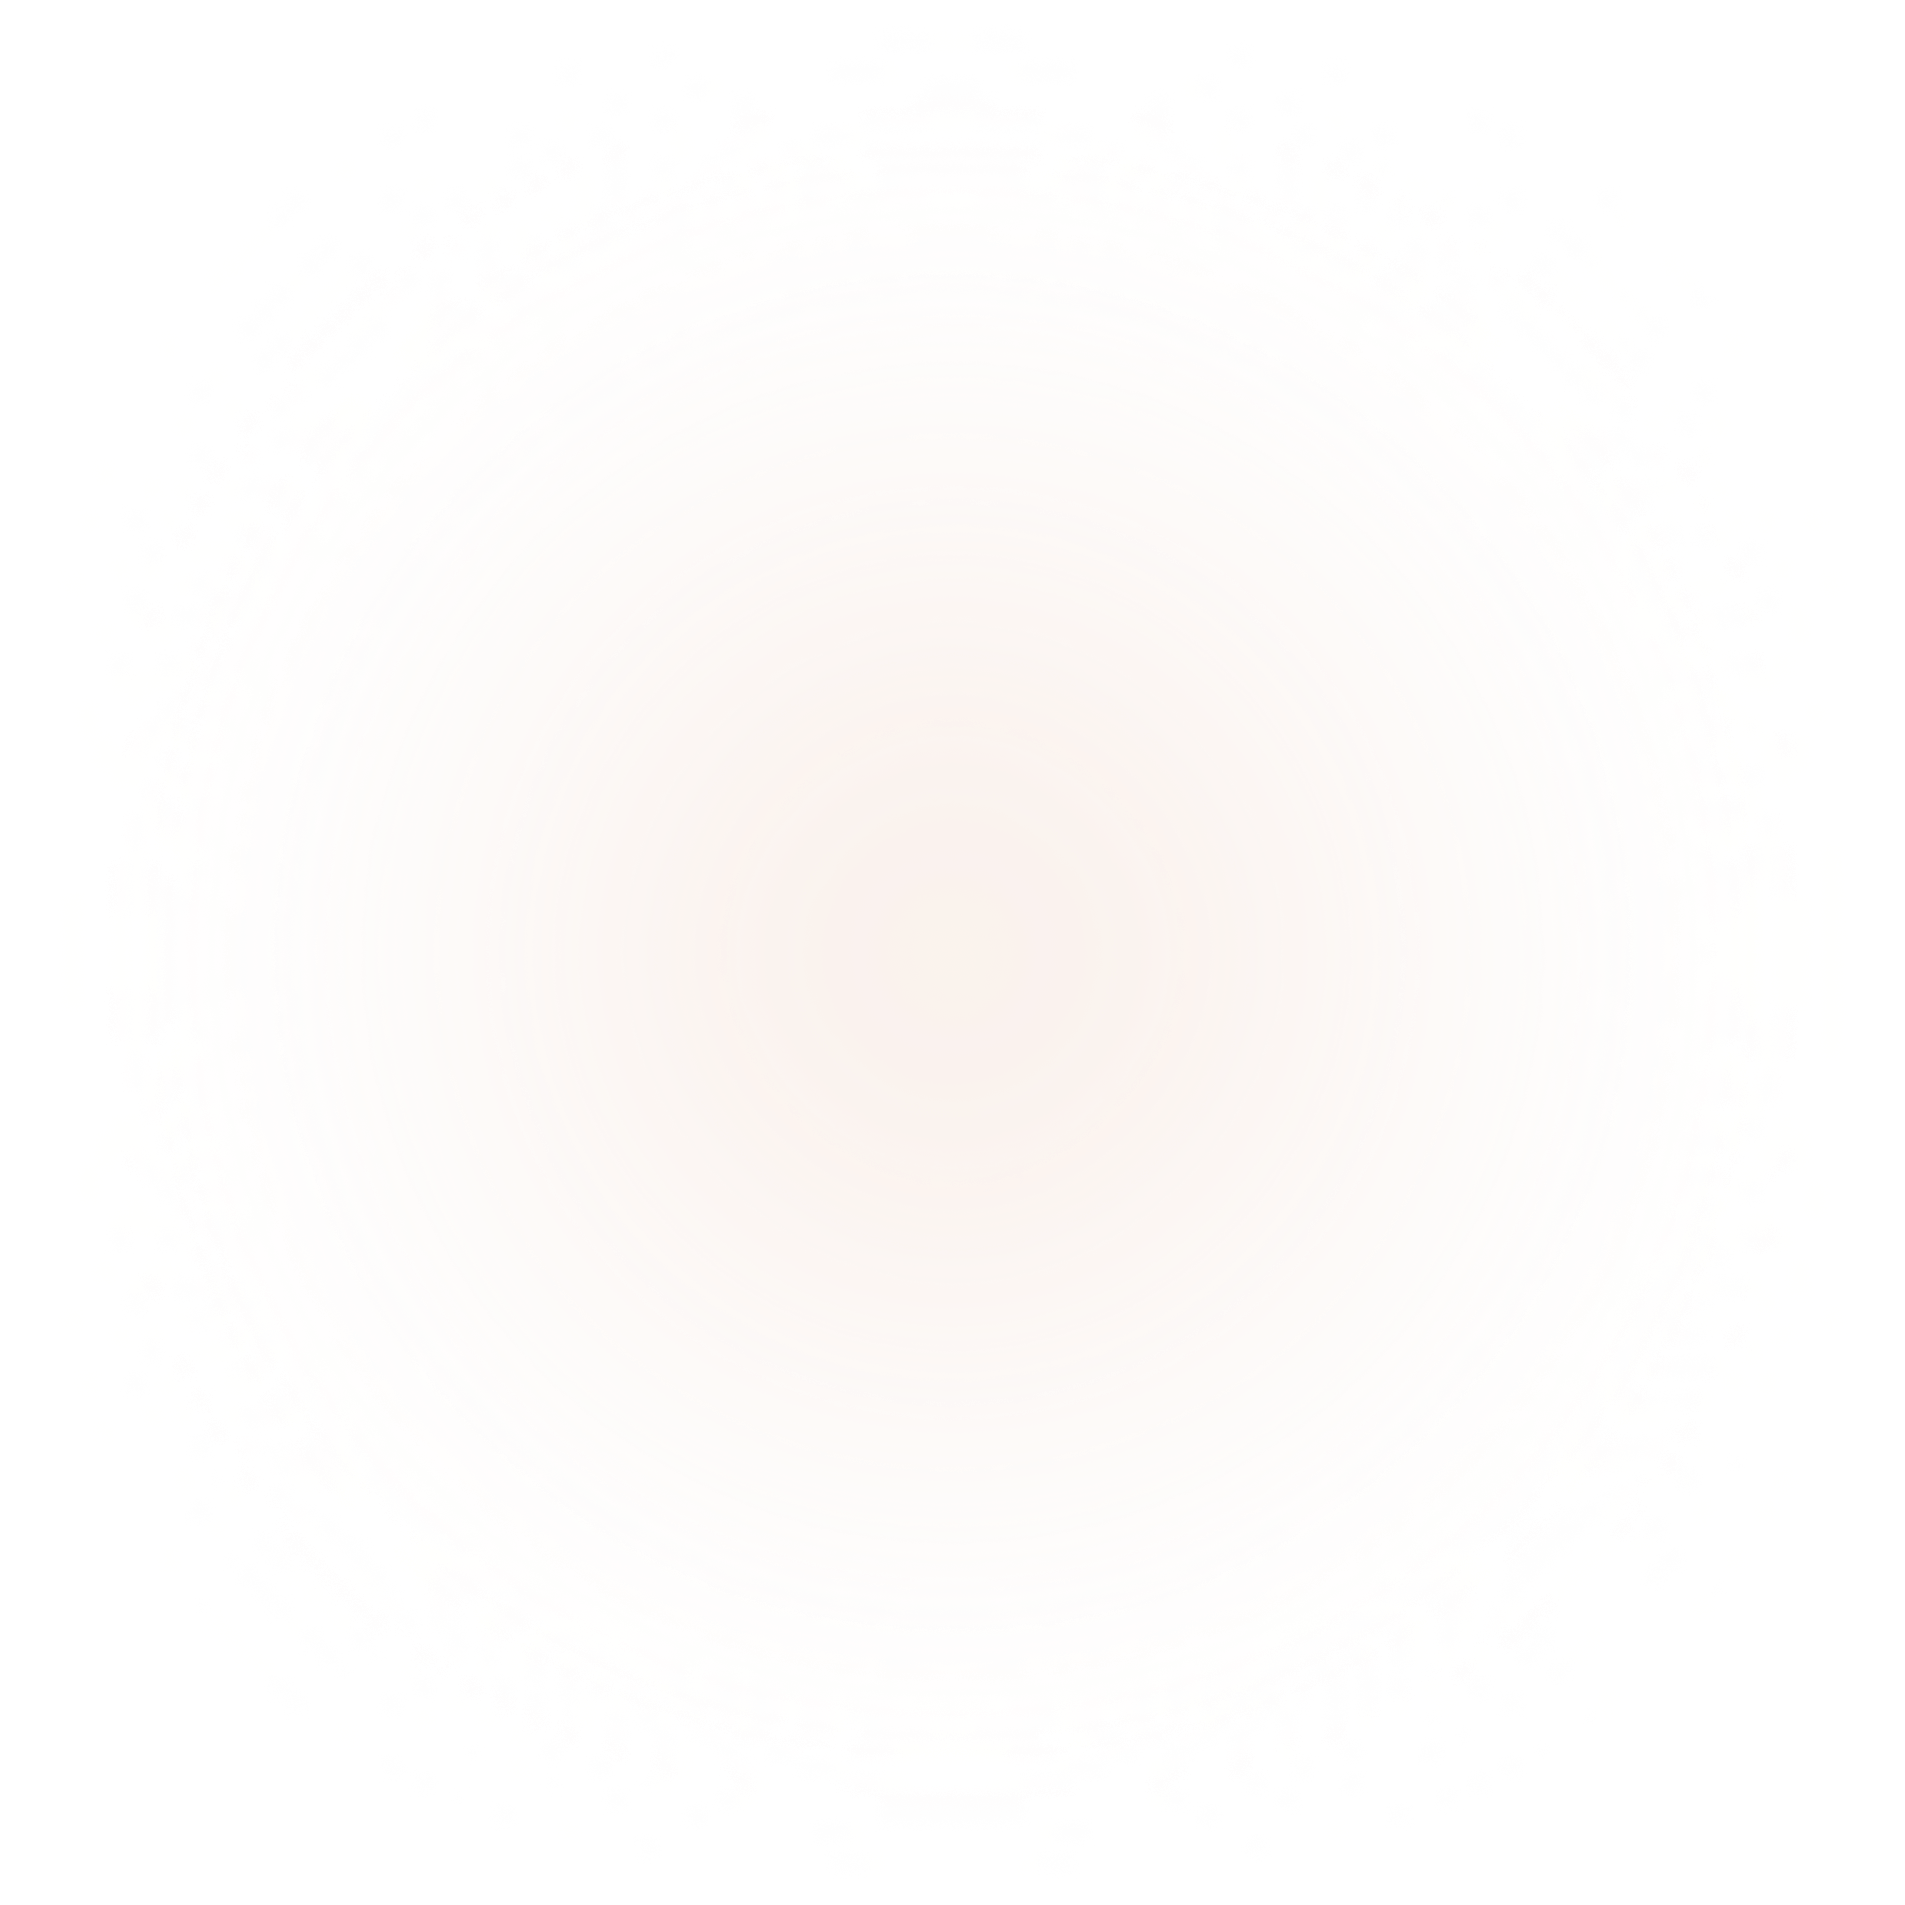 Blurred cream colored circle